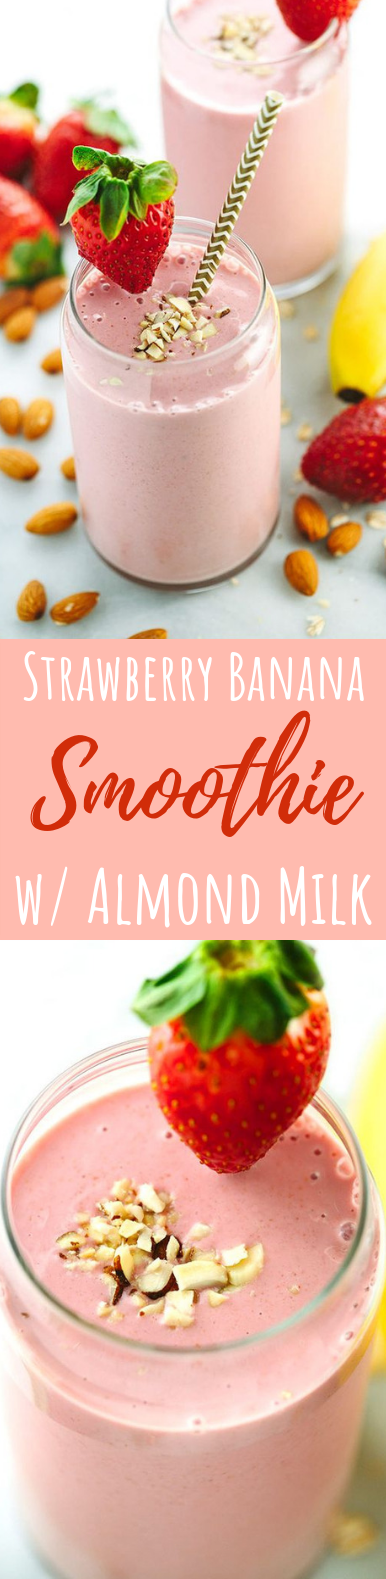 Strawberry Banana Smoothie with Almond Milk #healthydrink #breakfast